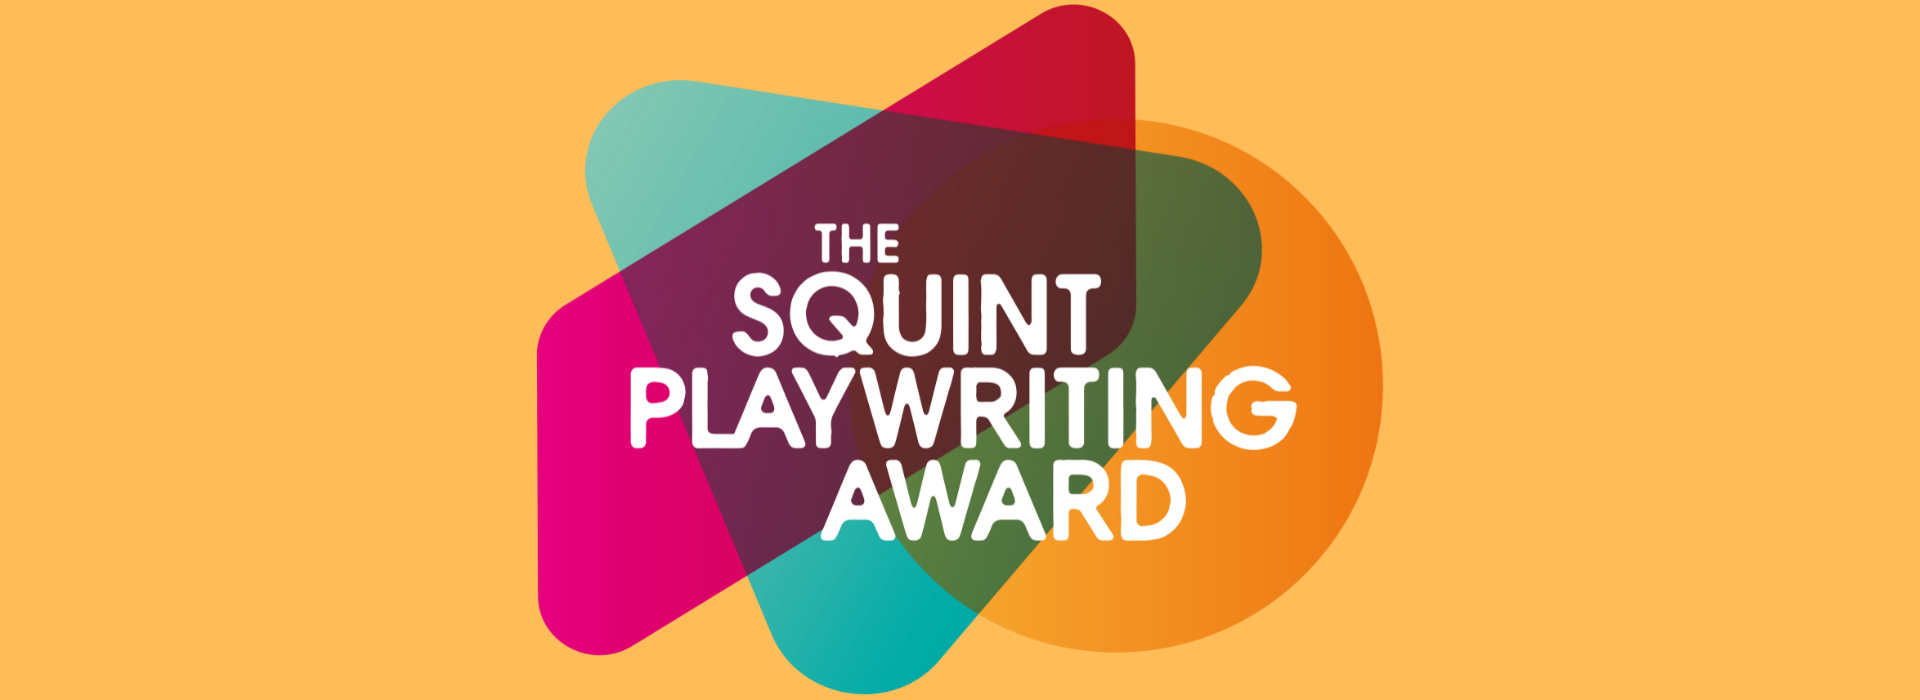 The Squint Playwriting Award Showcase